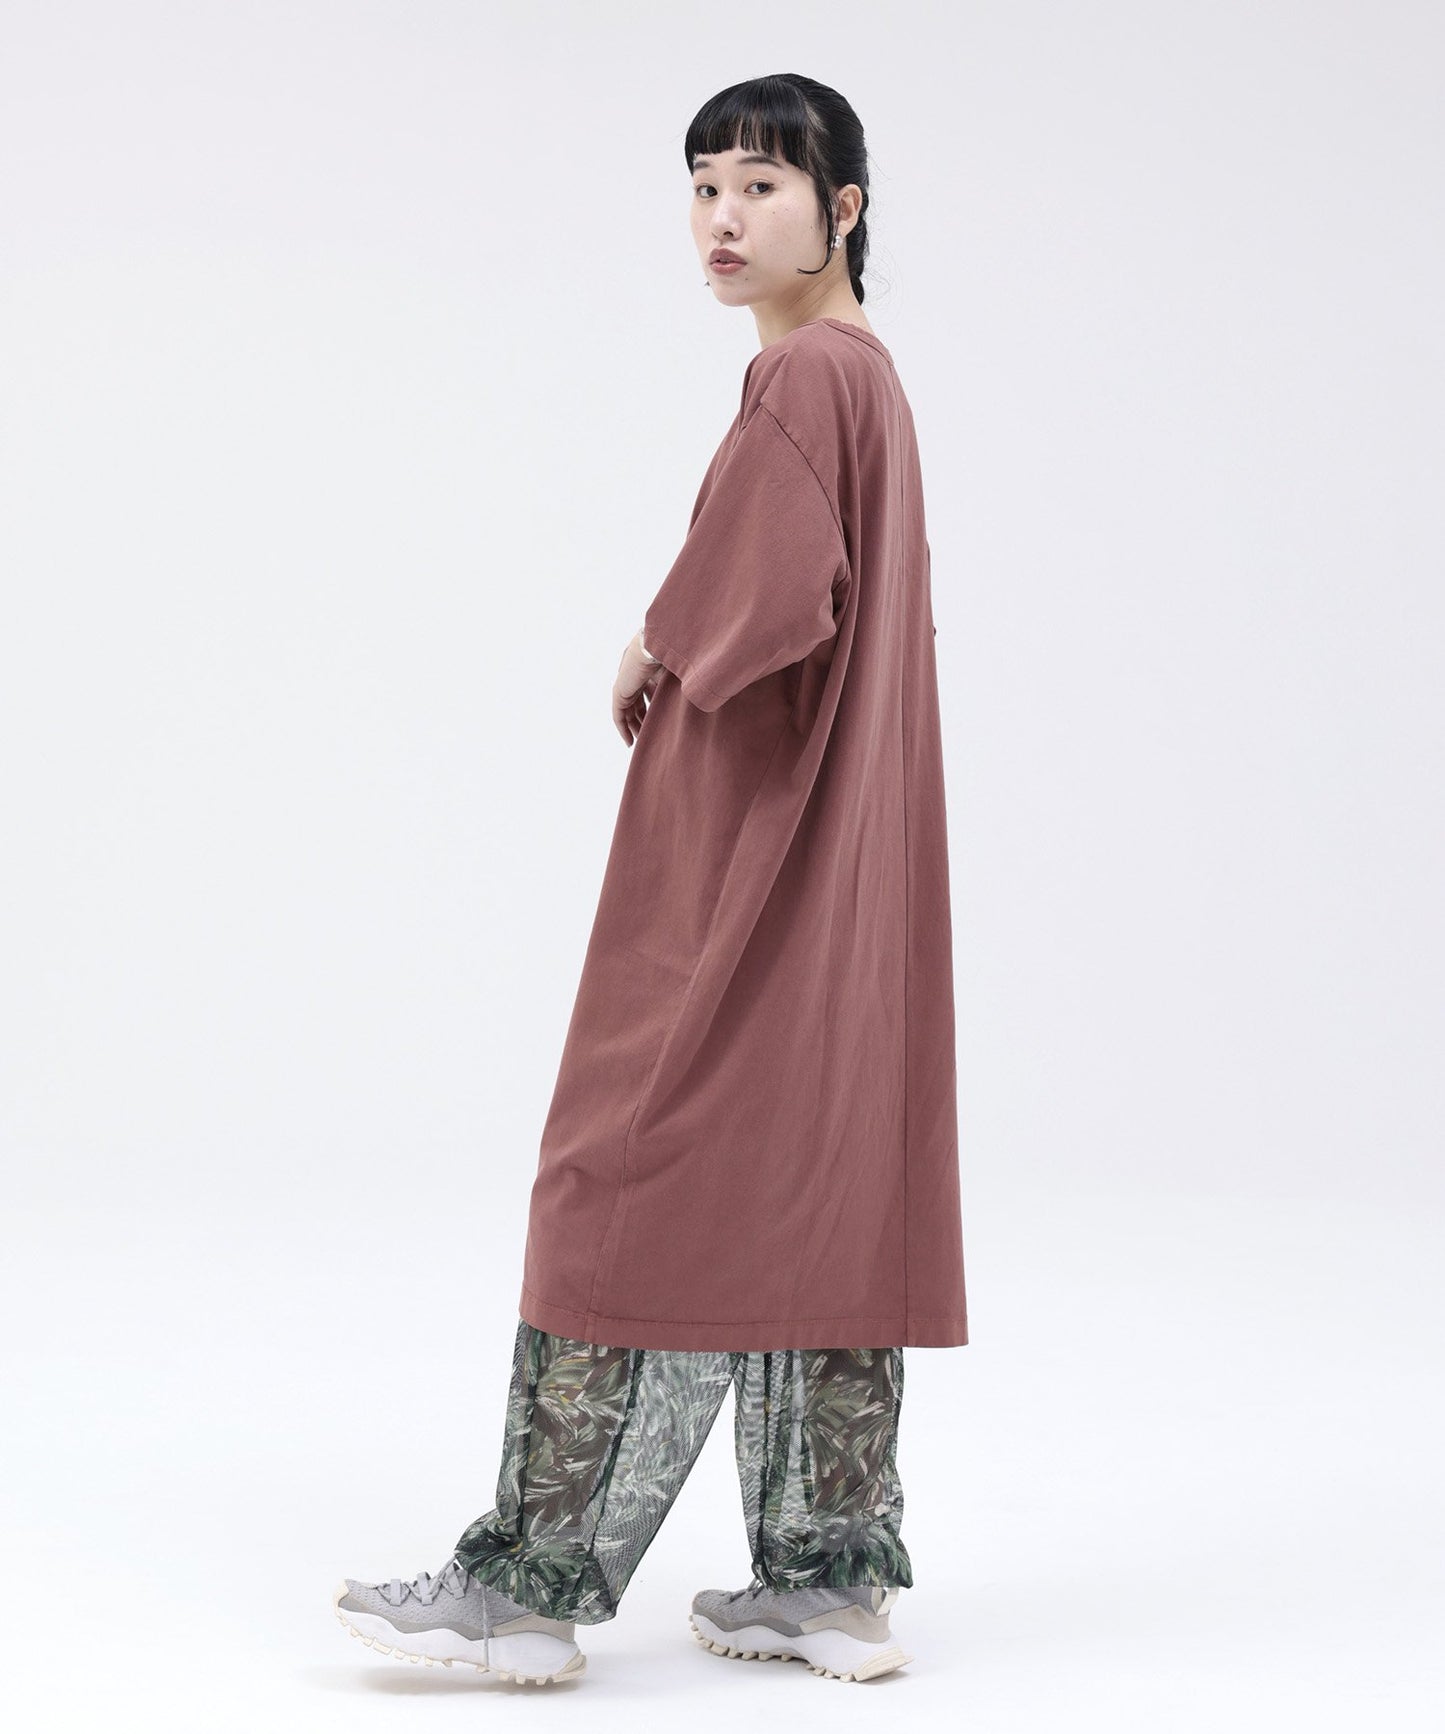 【環保材質】OG GD COTTON V/N SACK DRESS 有機棉 產品染色【155-165cm】